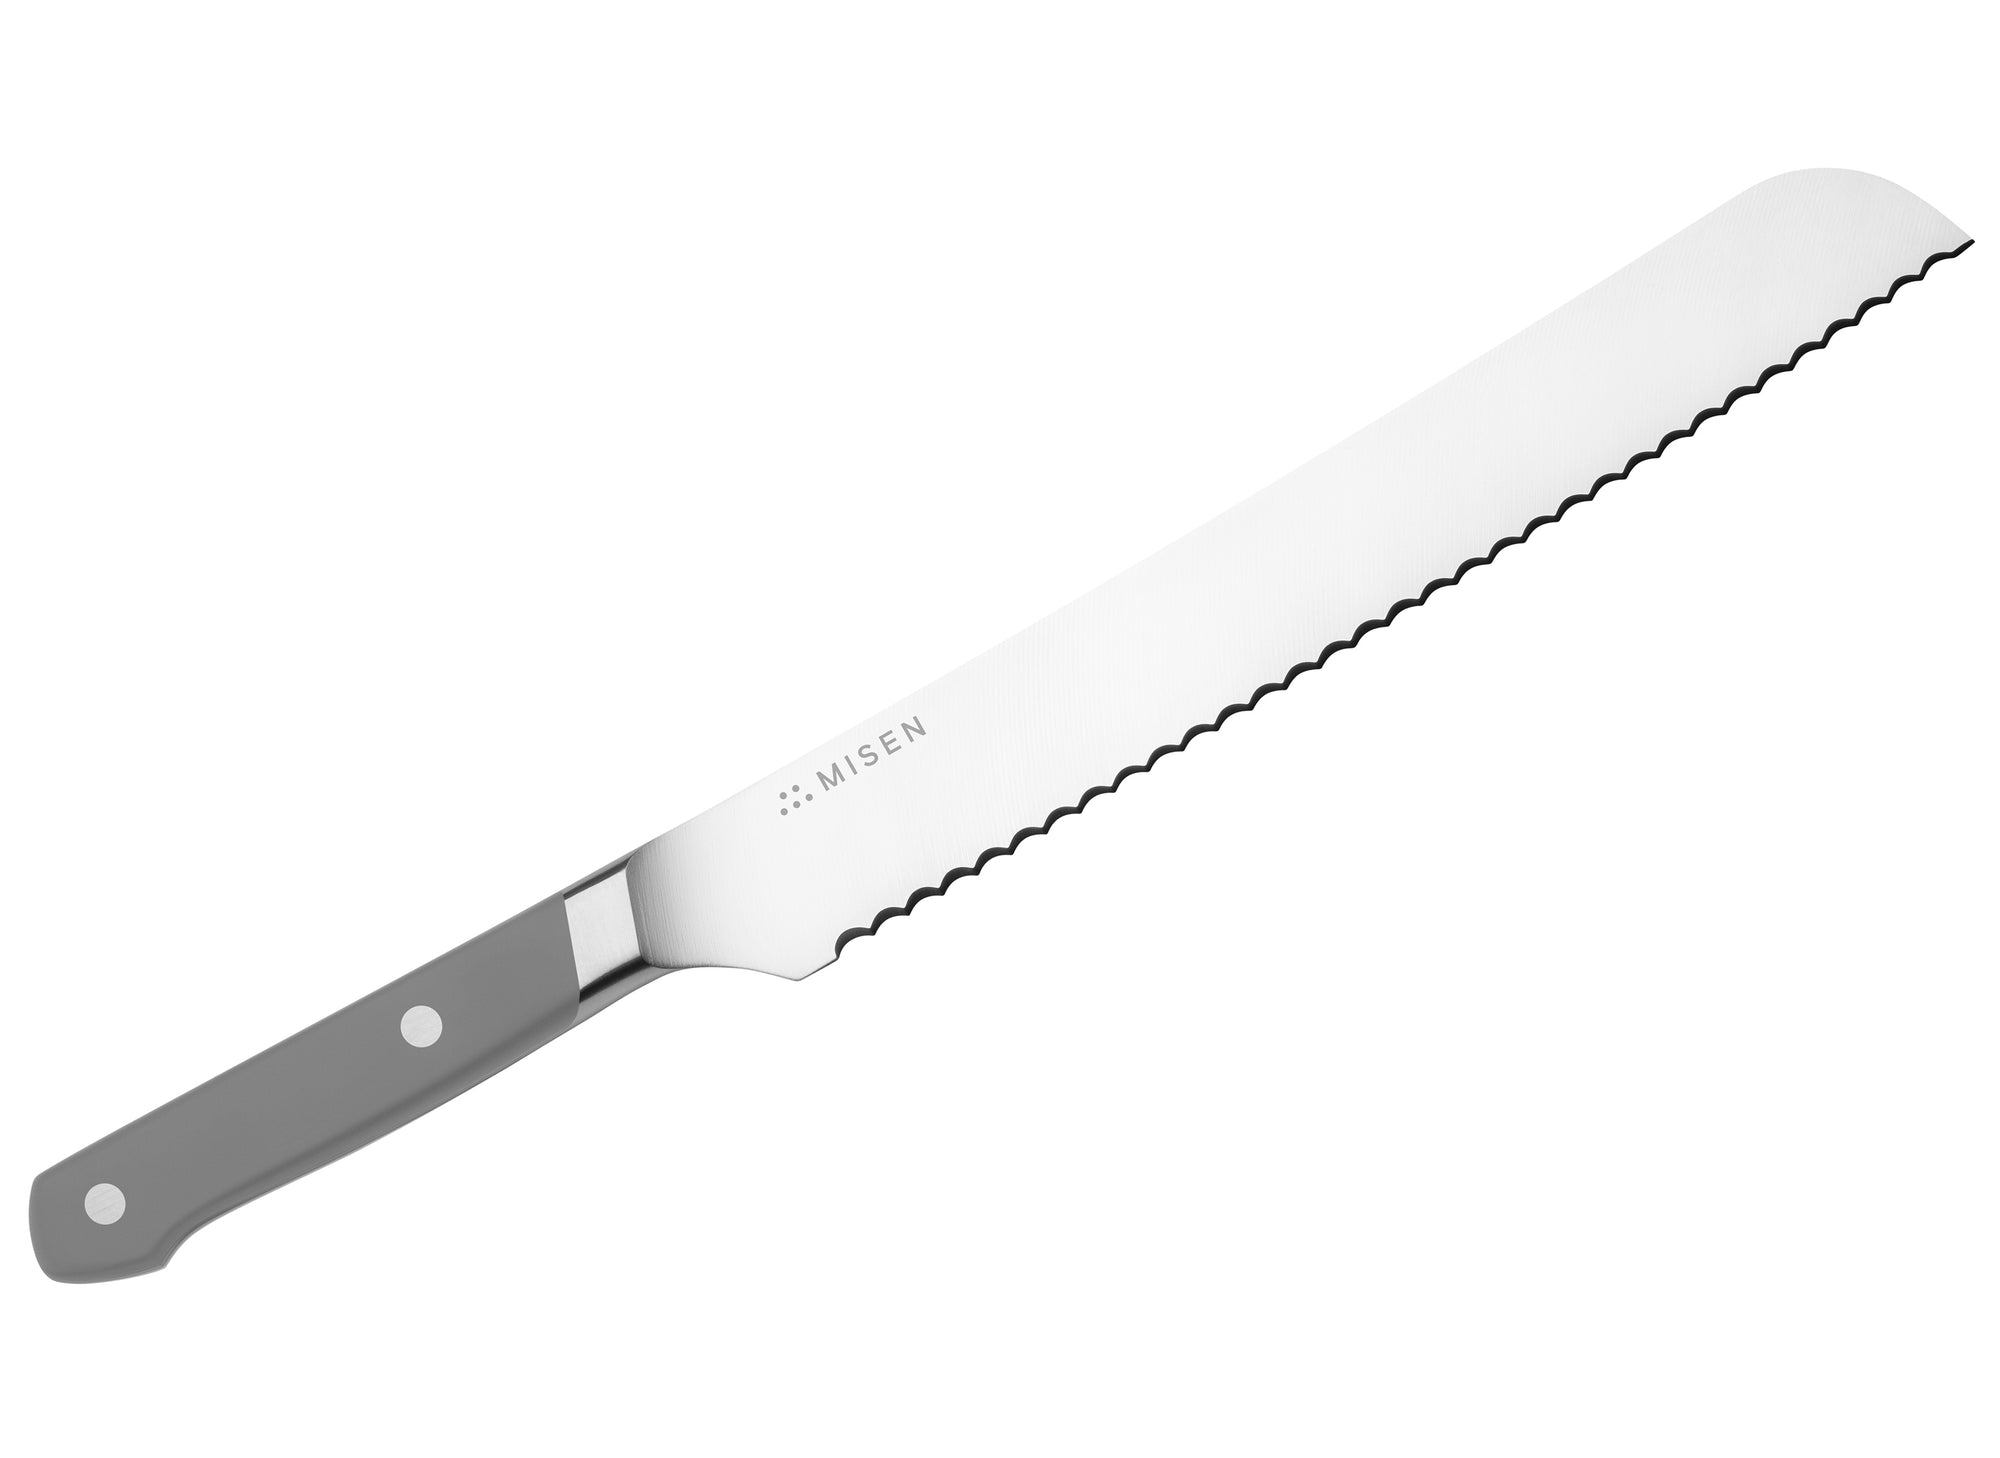 Misen Serrated Knife in gray